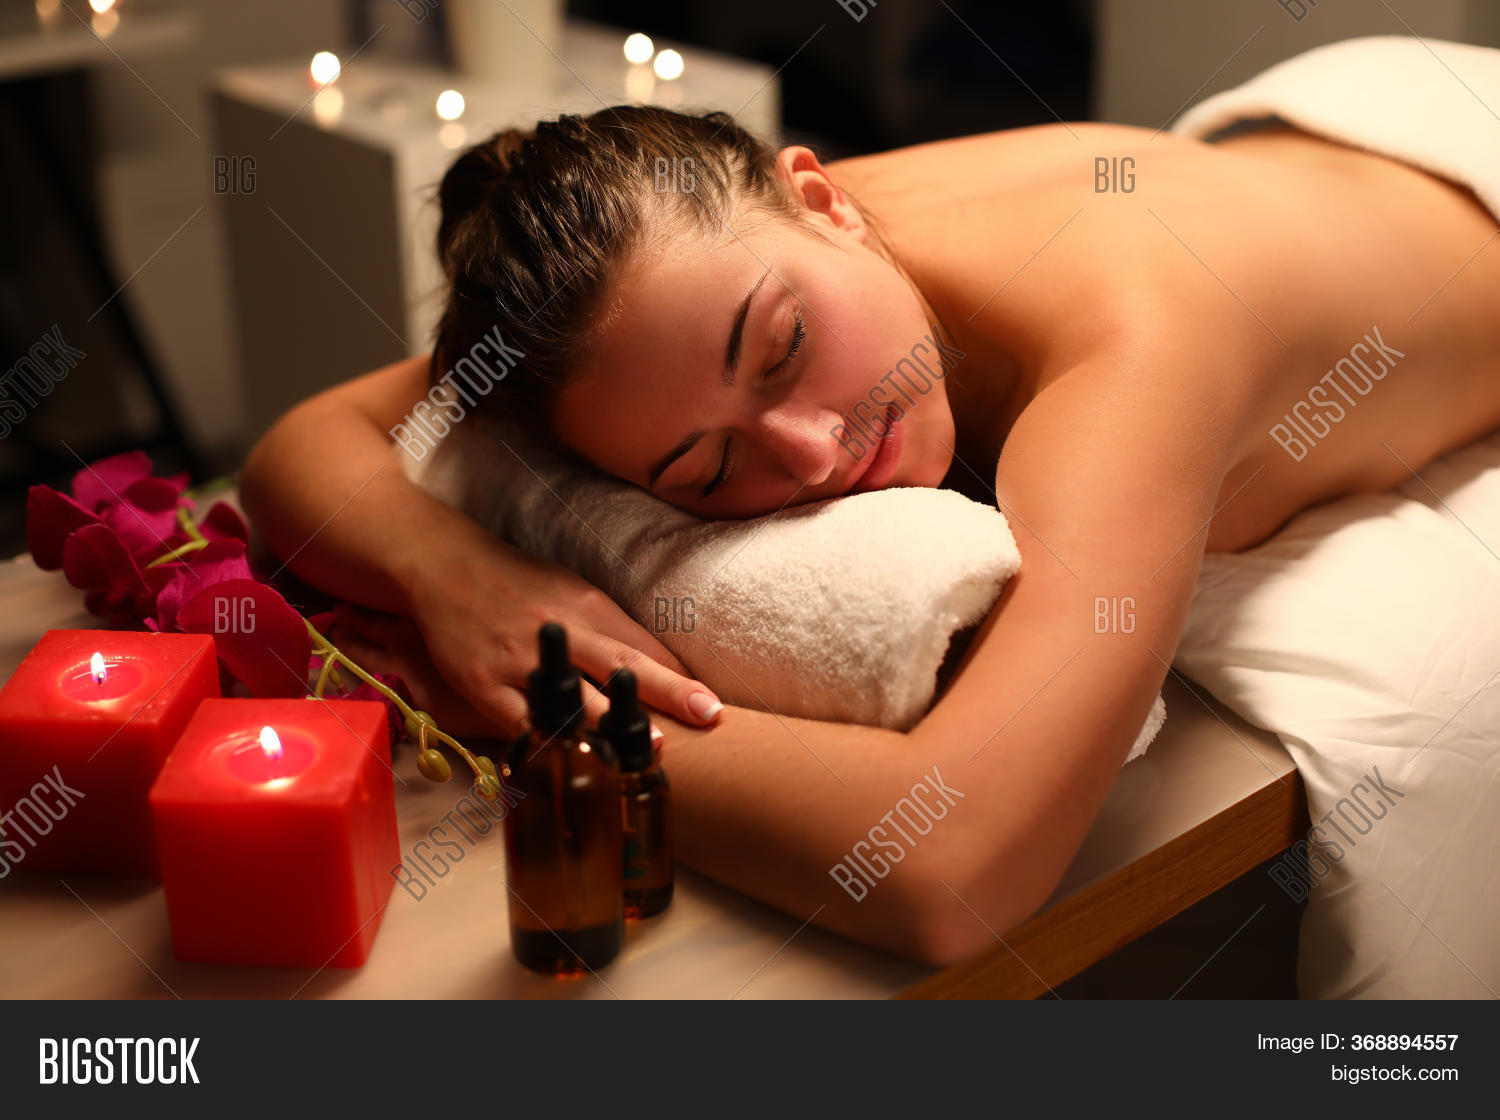 brett reedman share naked massage at home photos